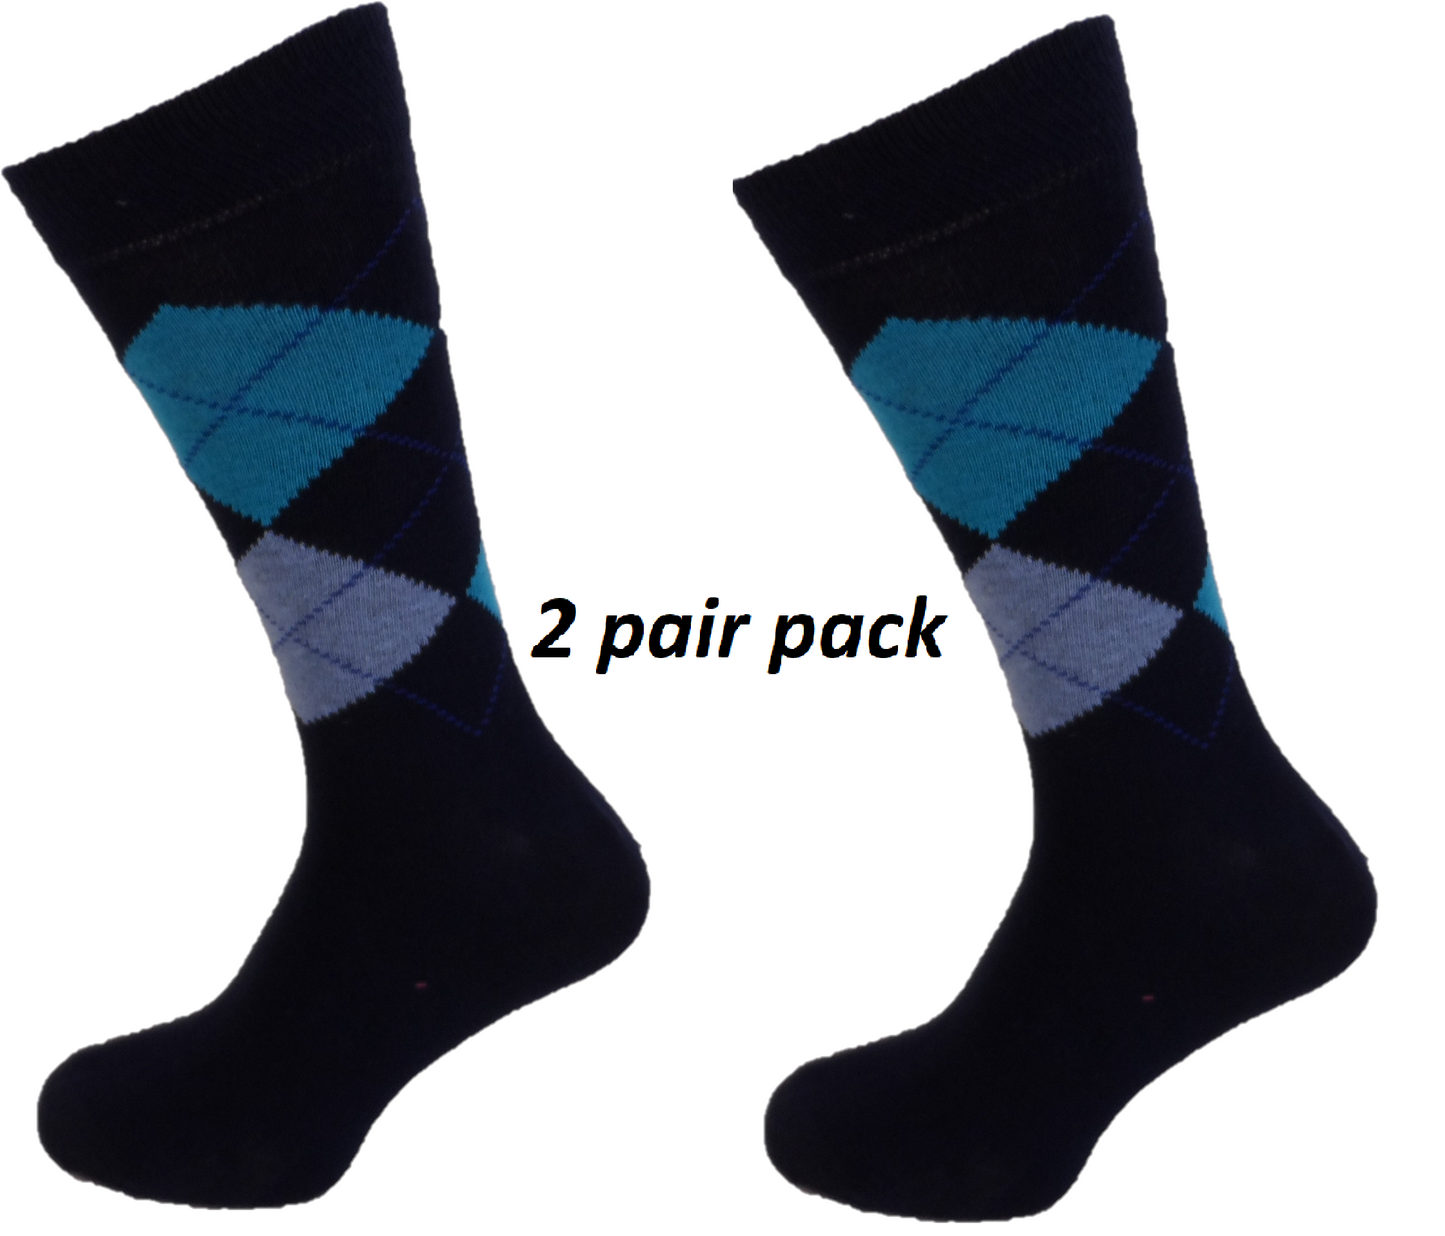 Mens 2 Pair Pack of Navy Blue Argyle Patterned Socks